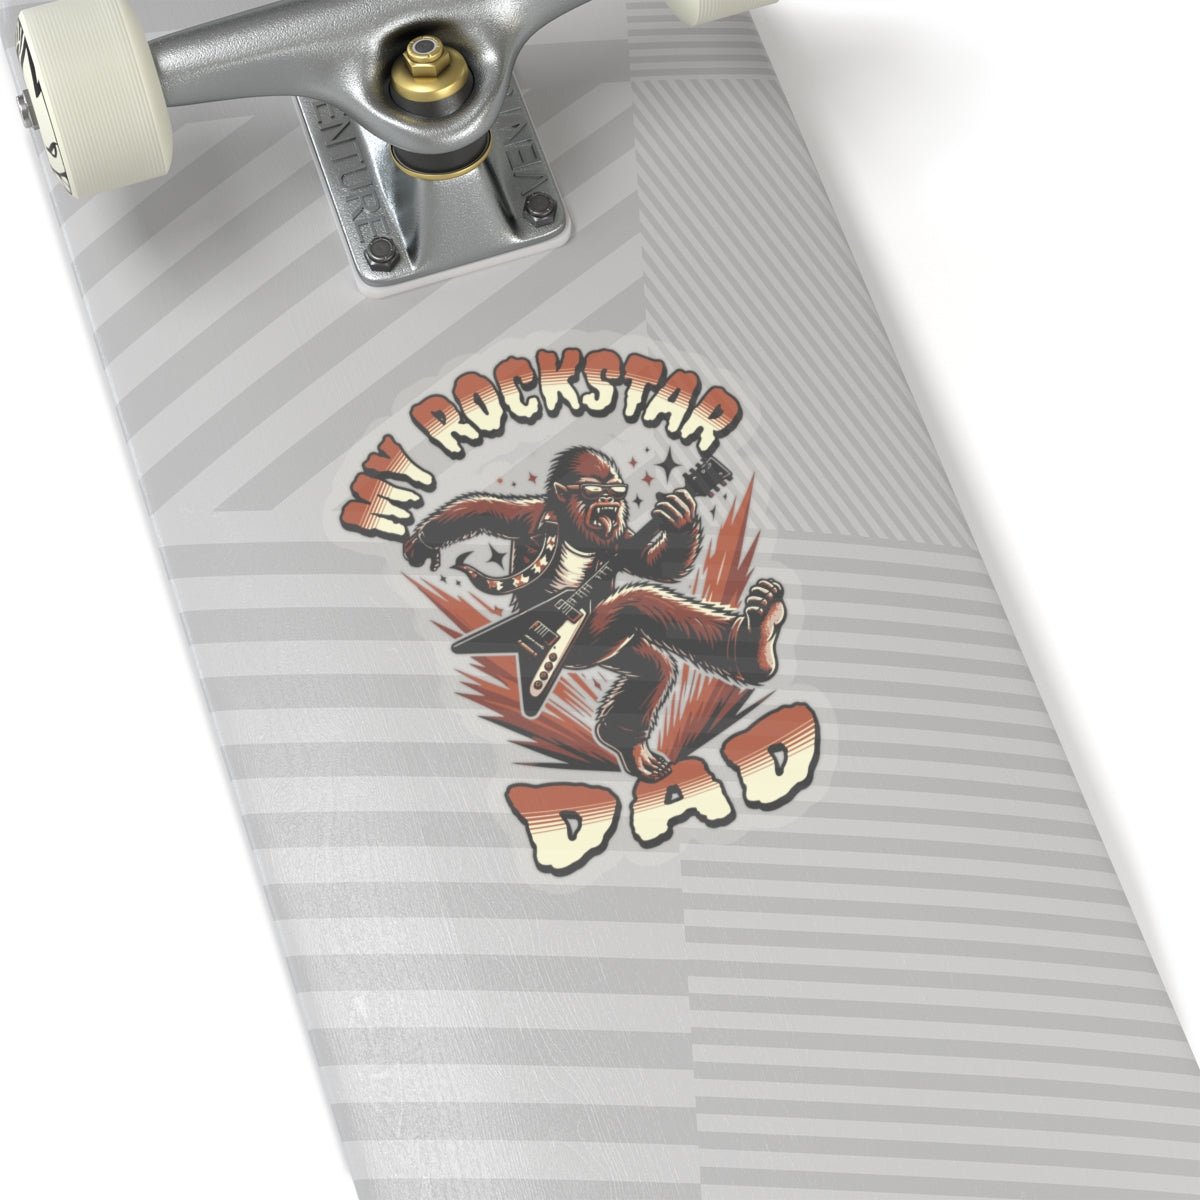 My Rockstar Dad Sticker | Big Foot Sticker | Father's Day Gift | Dad Sticker | Dad Birthday Gift | Big Foot Playing A Bass Guitar